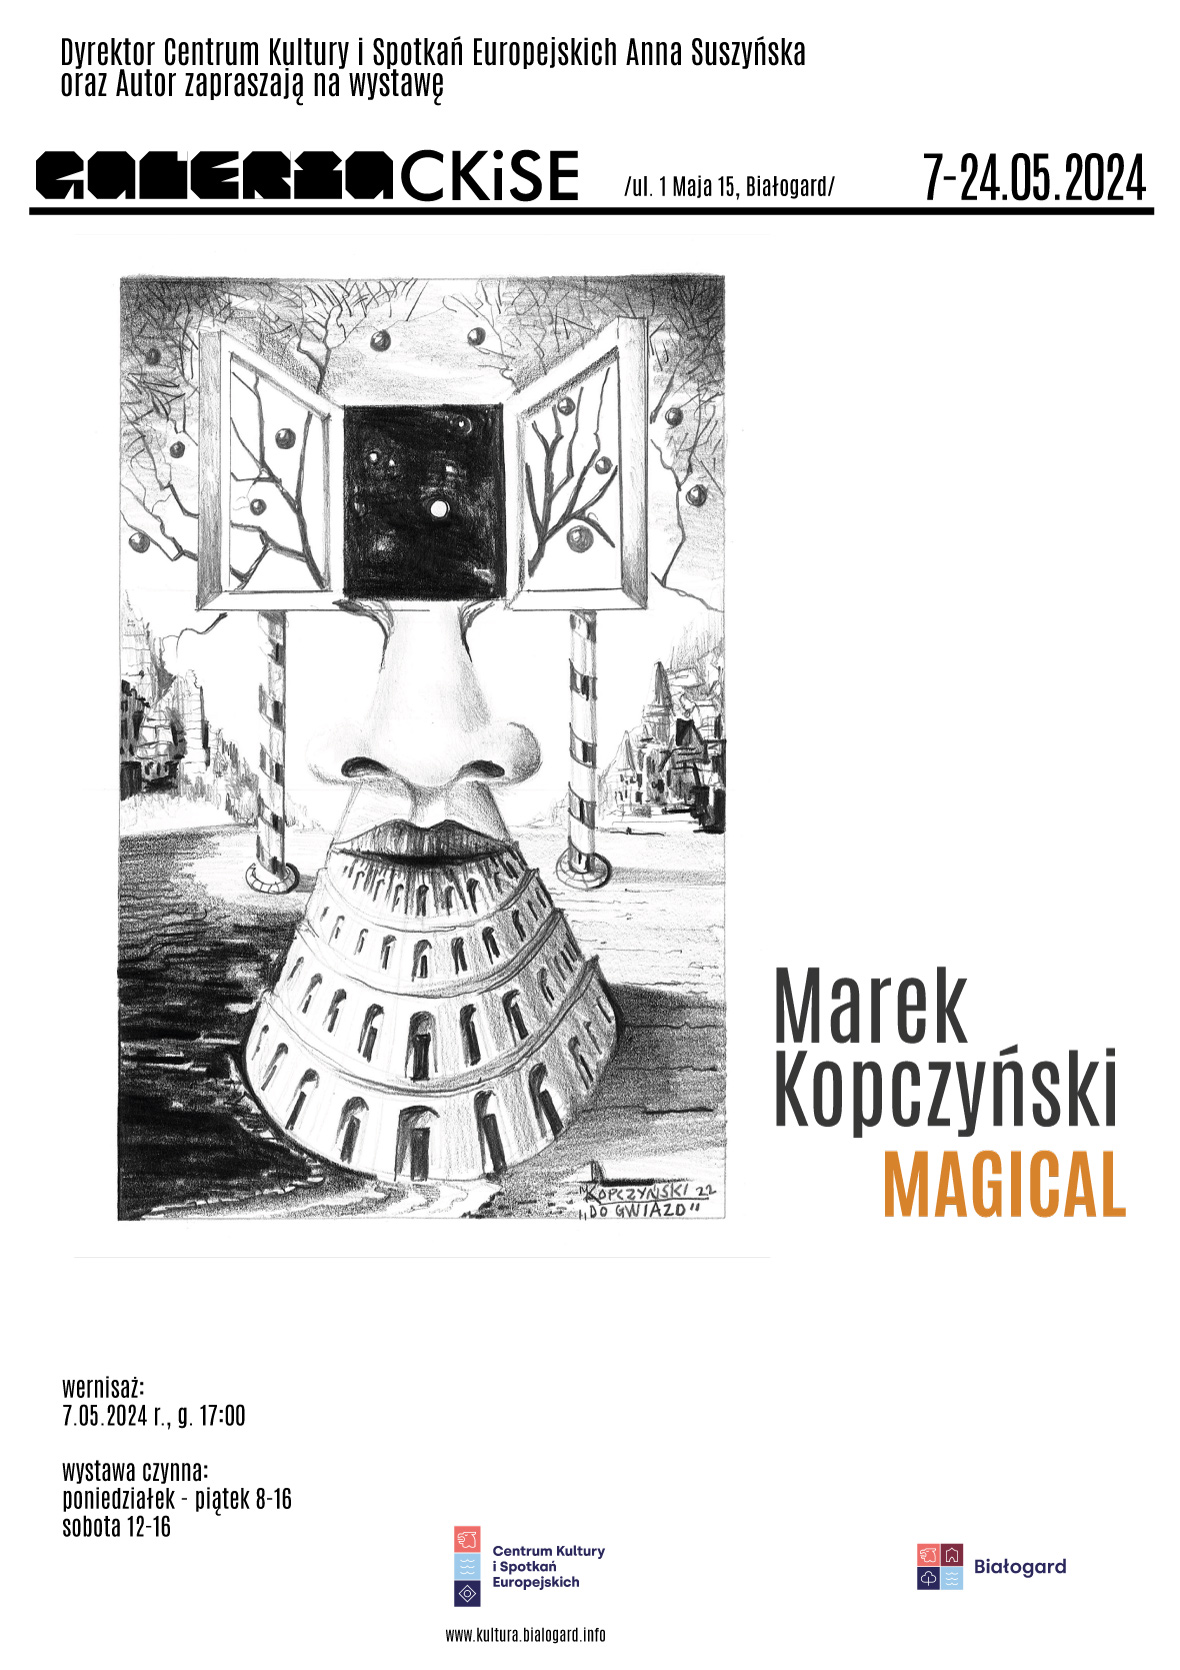 MK-MAGICAL-PLAKAT-web.jpg